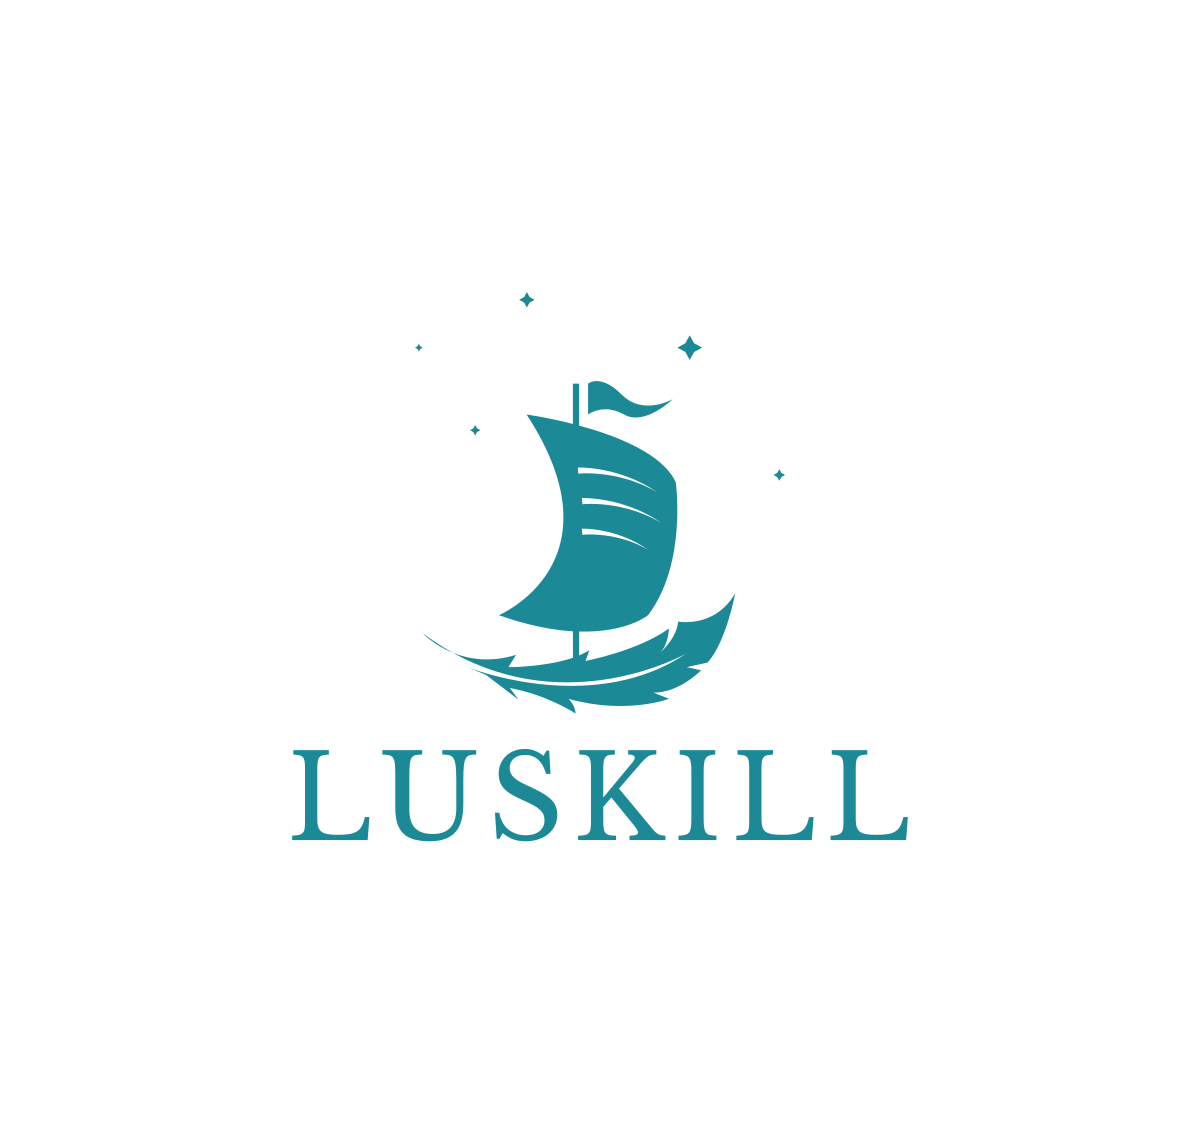 Học viện LUSKILL 